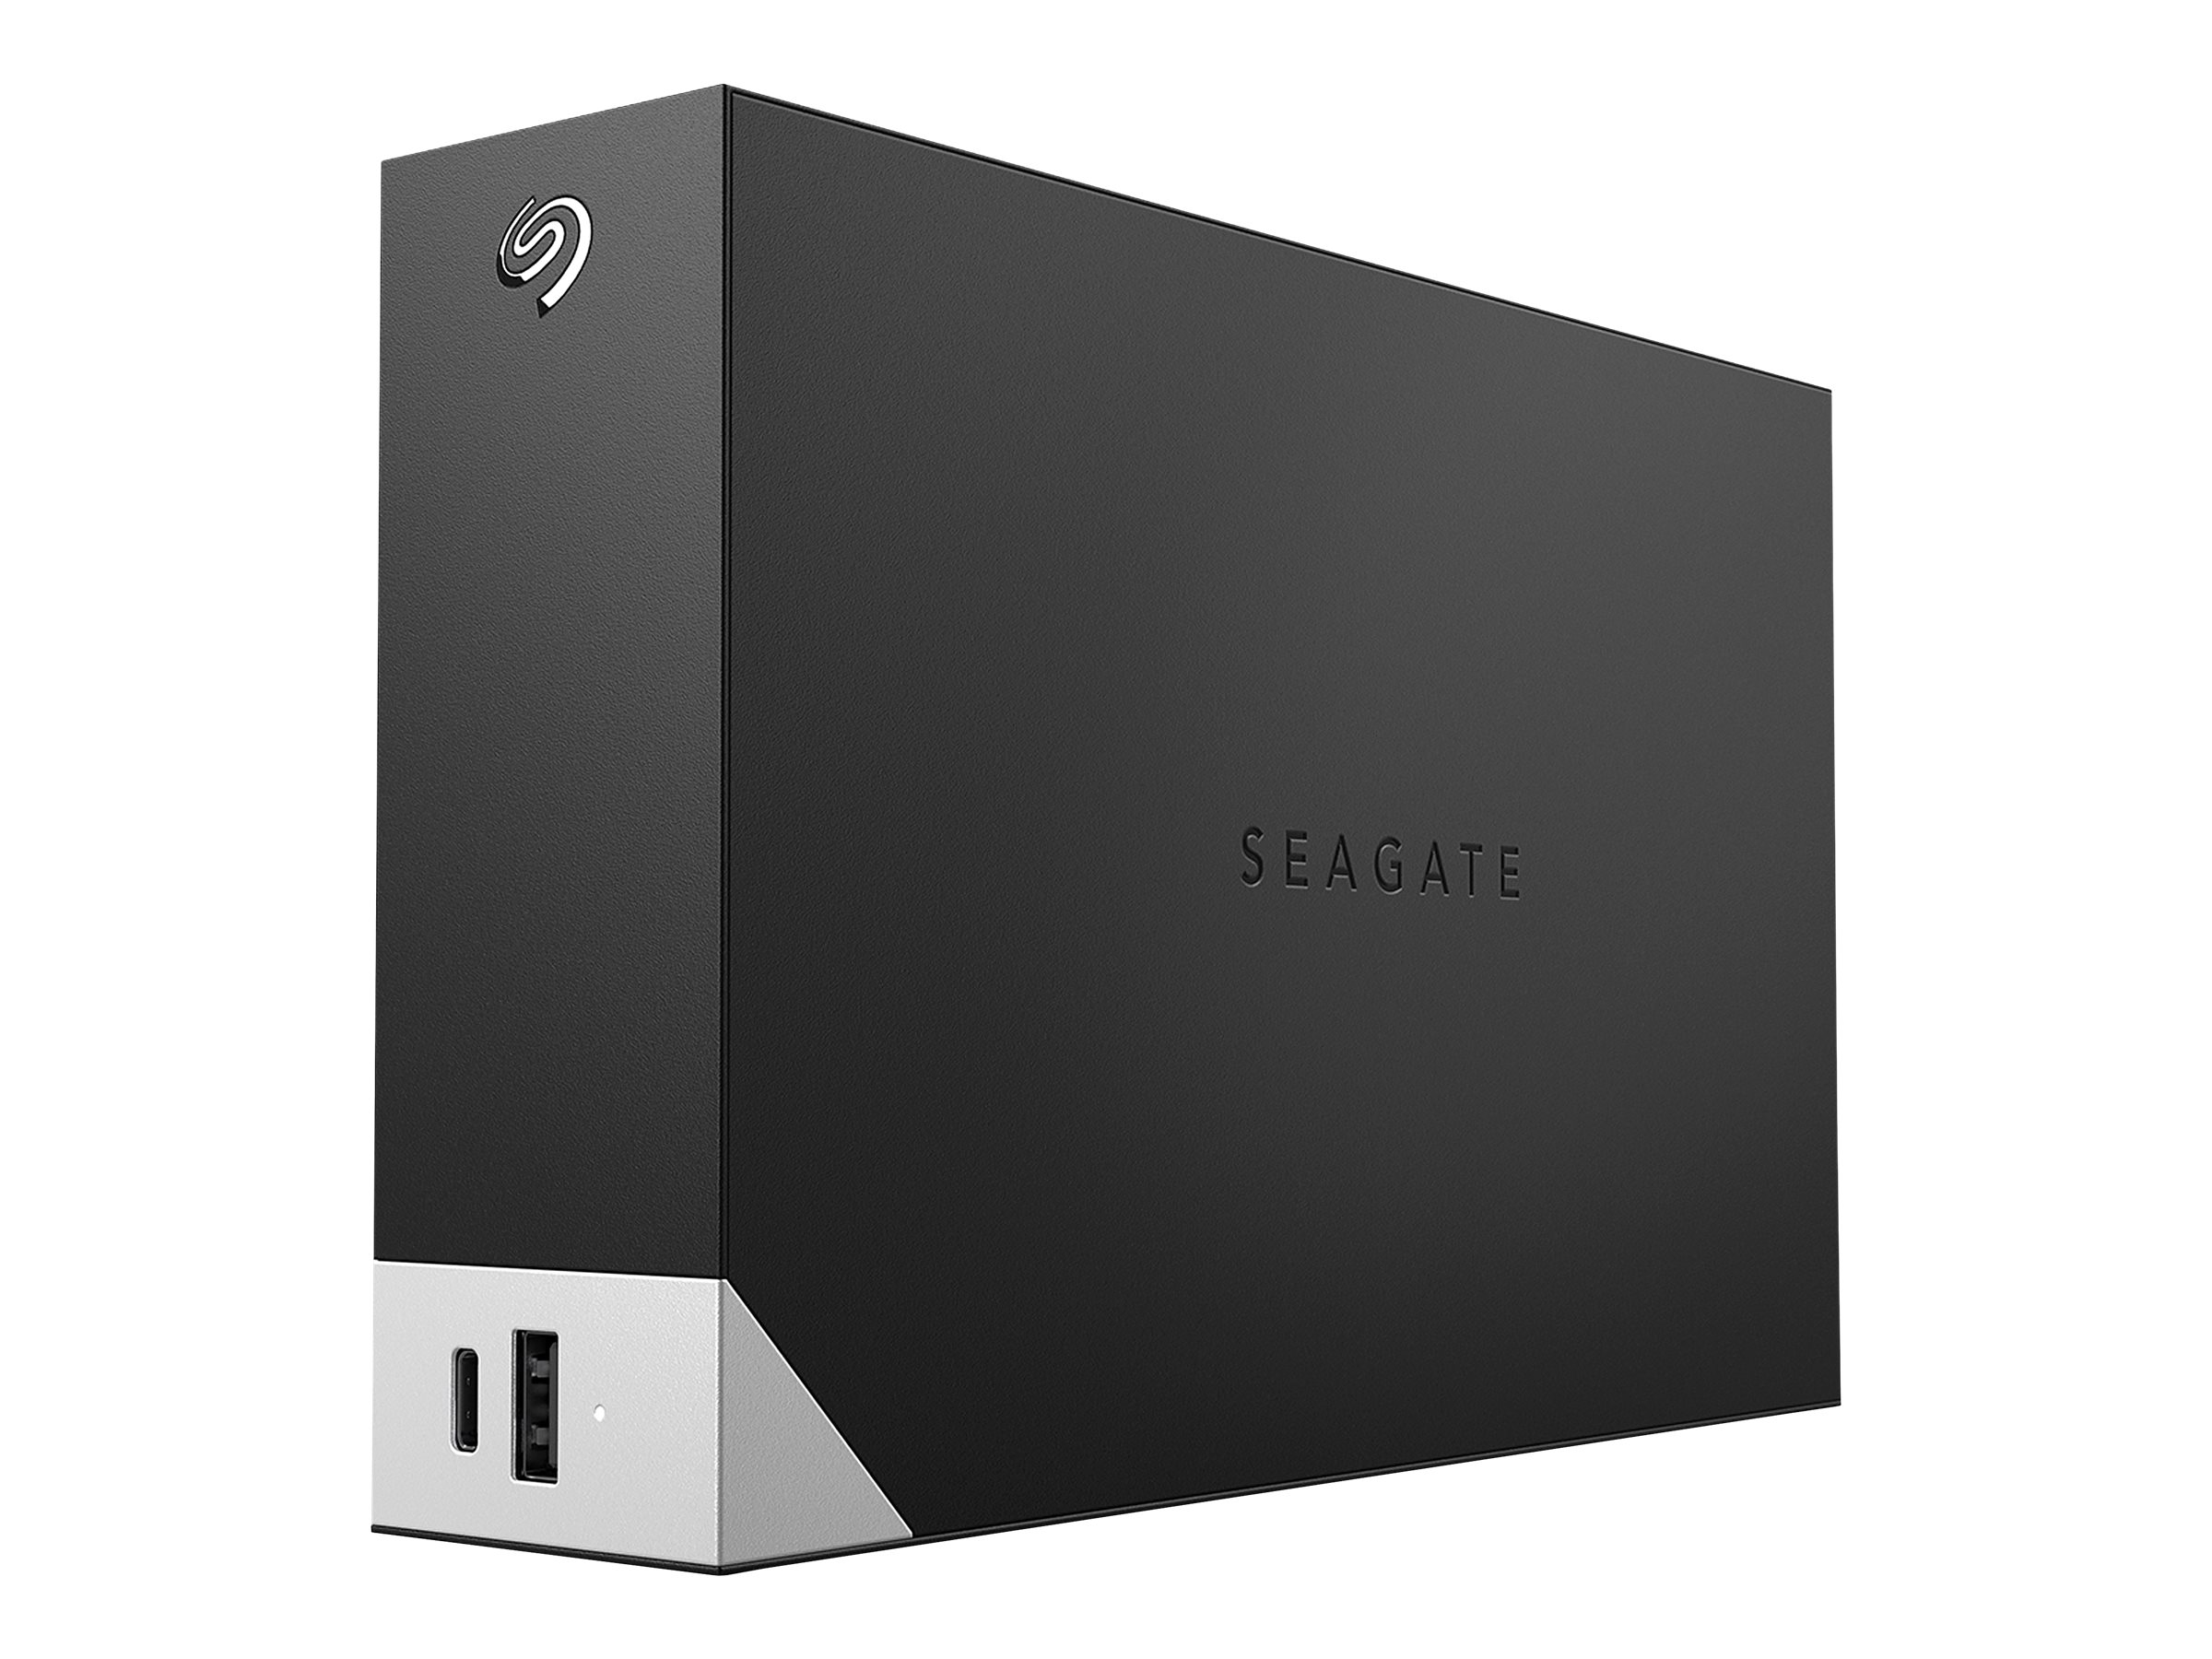 Seagate One Touch with hub STLC4000400 - Festplatte - 4 TB - extern (Stationär) - USB 3.0 - Schwarz